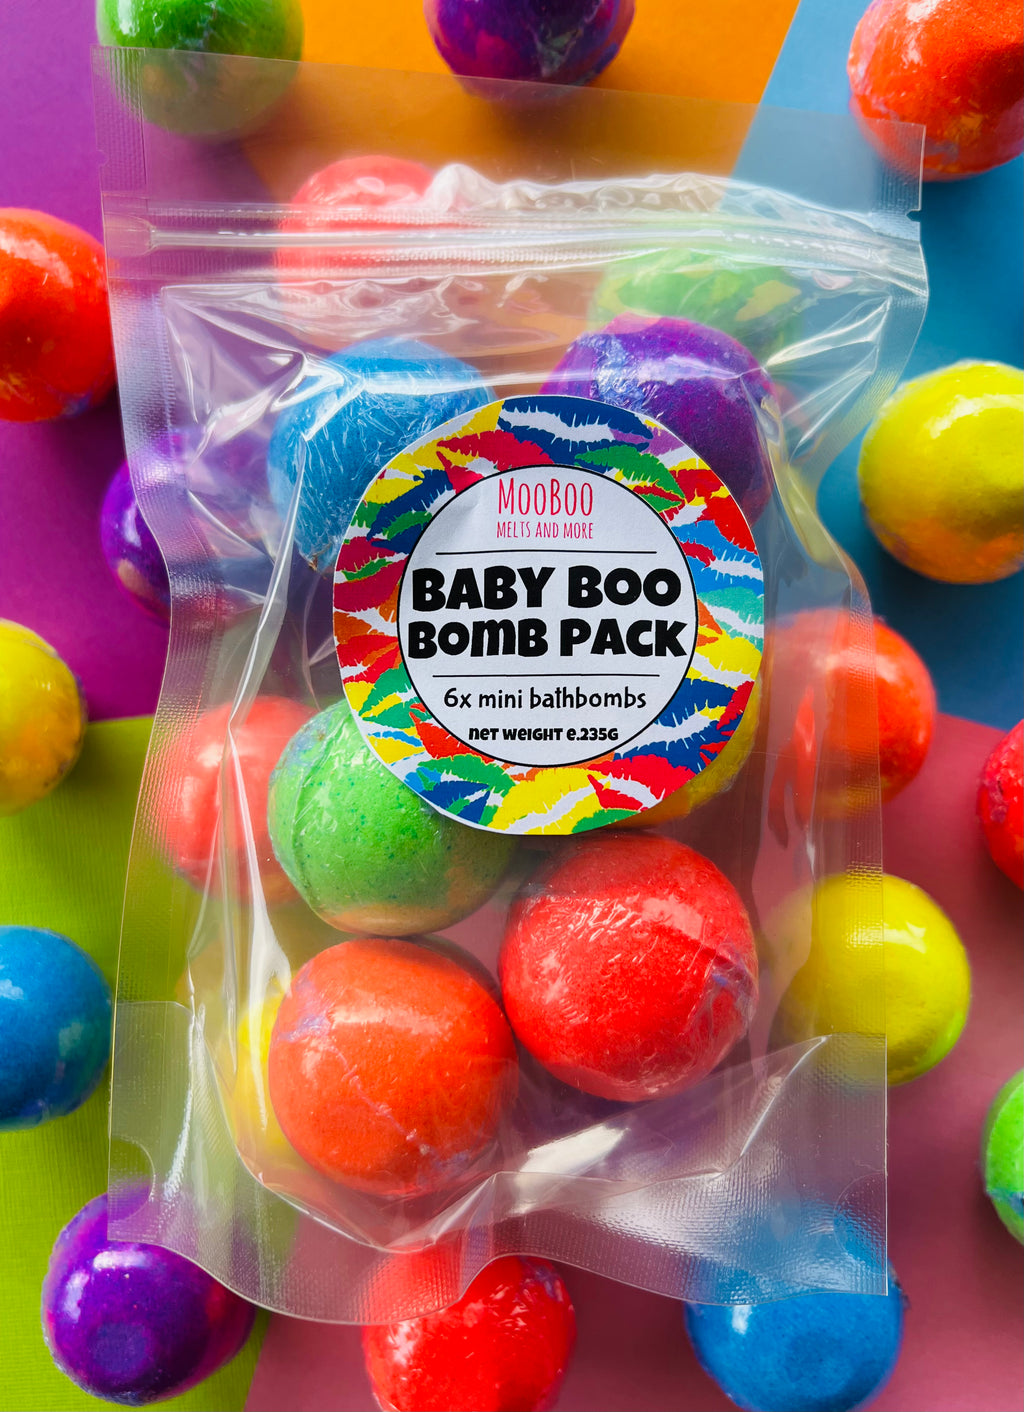 Boo Bomb packs